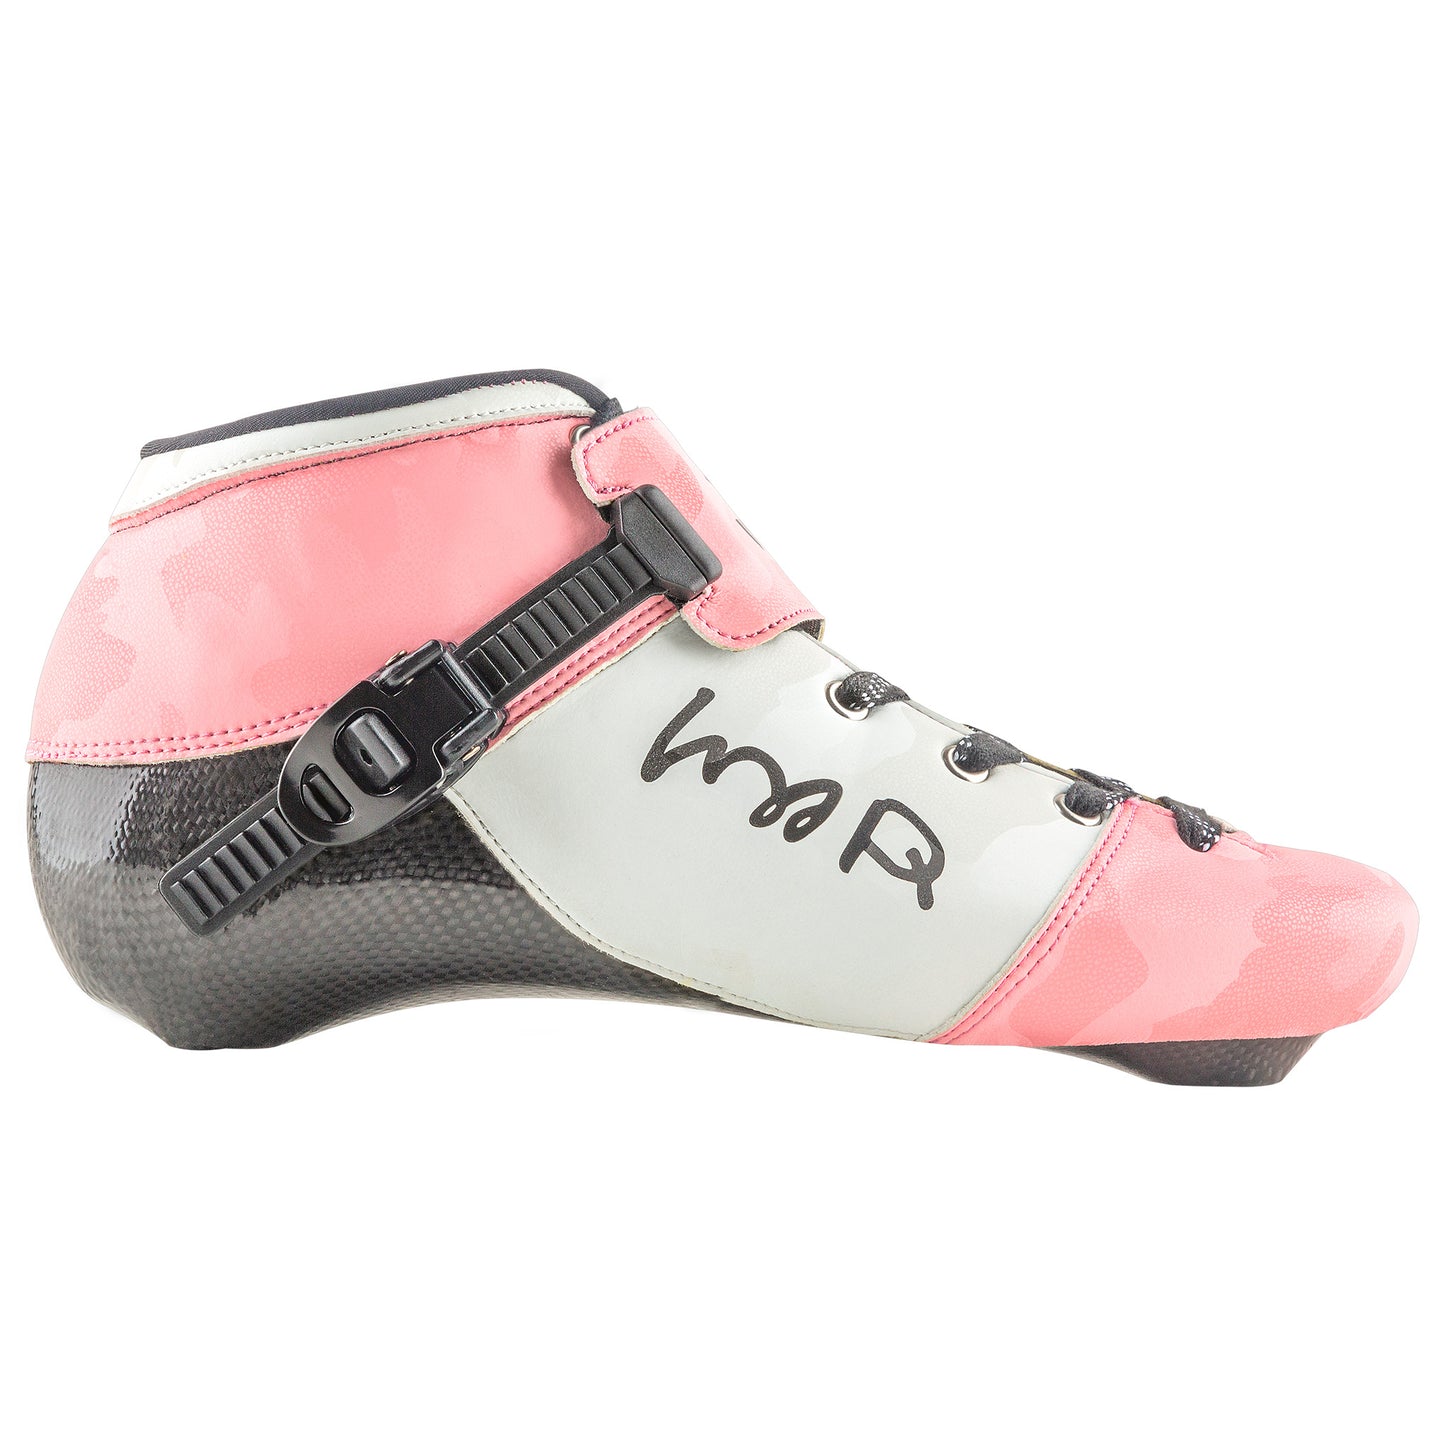 ZQ speed skate boots pink